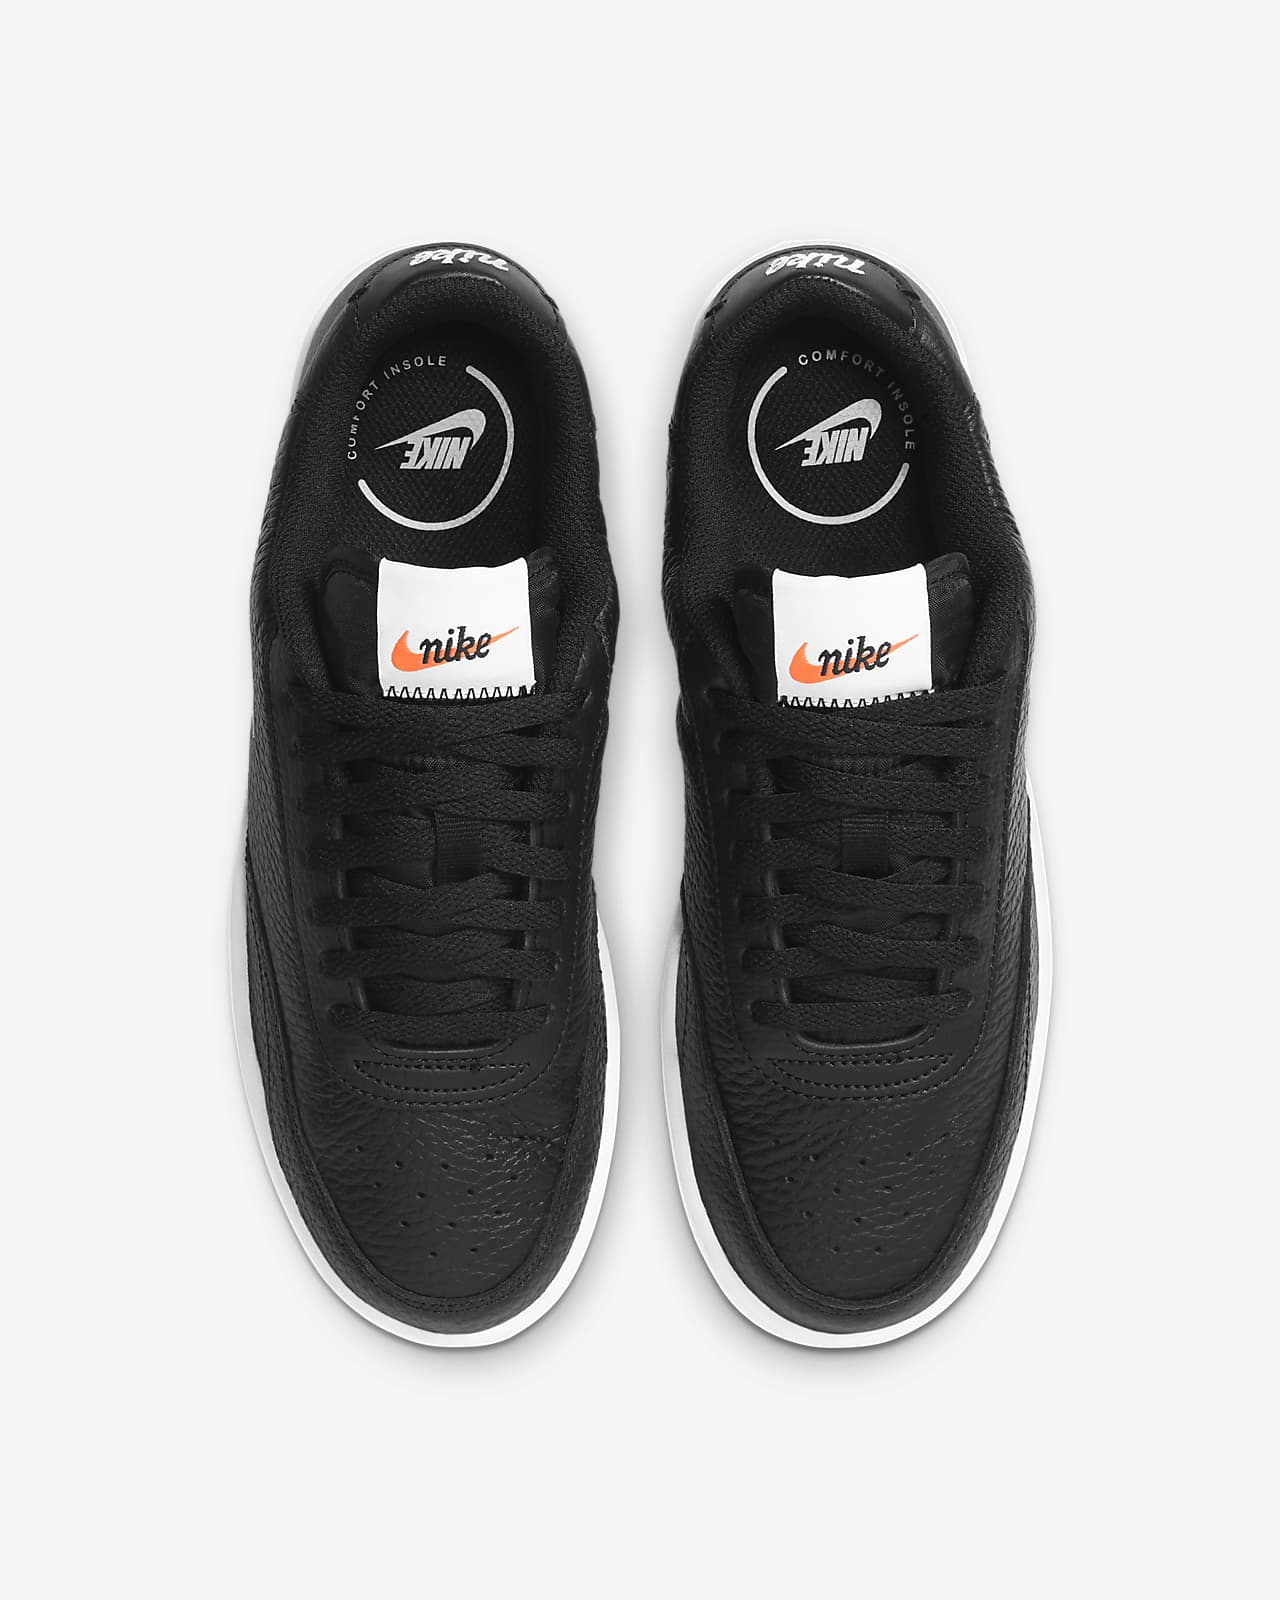 nike court shoes black